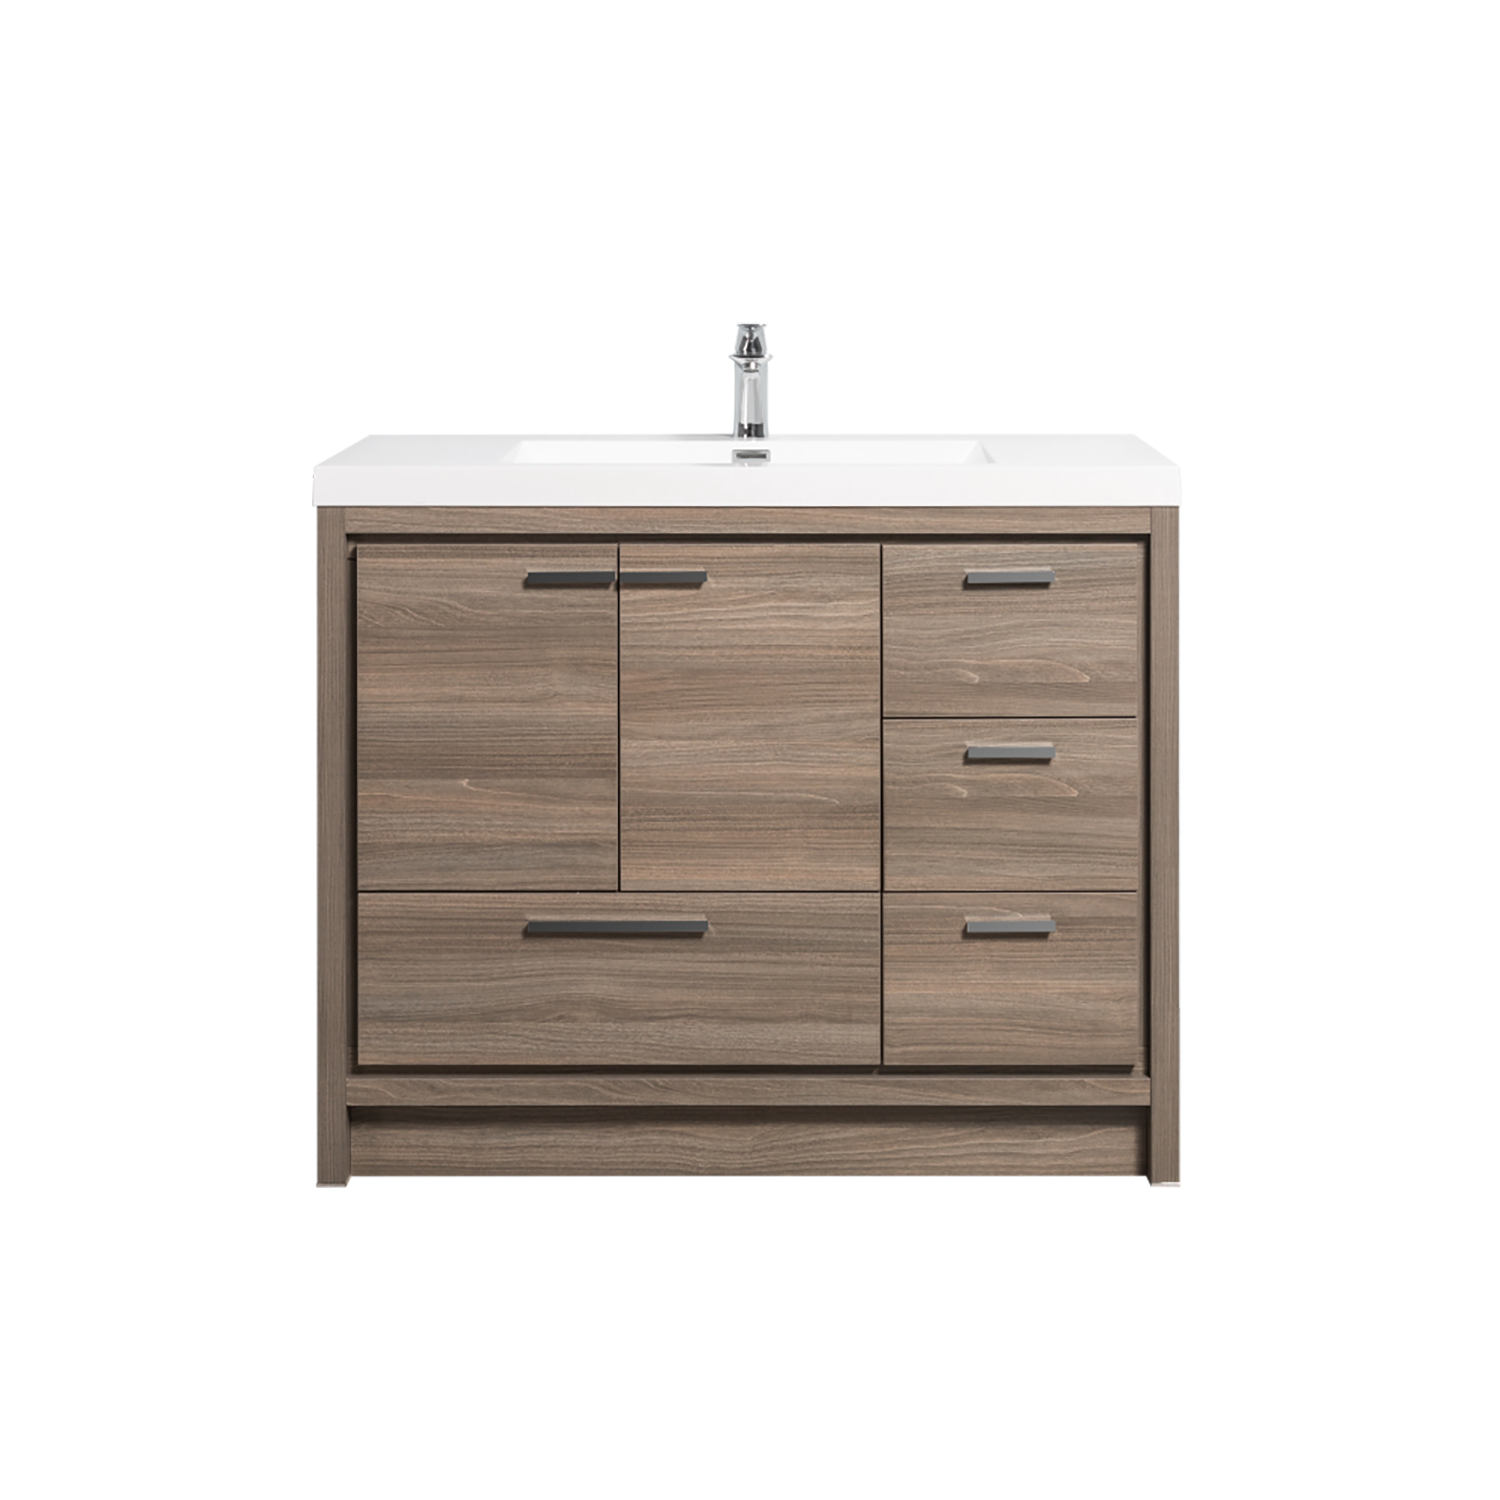 Duko Allier 42R 42" Rectangular Sink Bathroom Vanity Cabinet